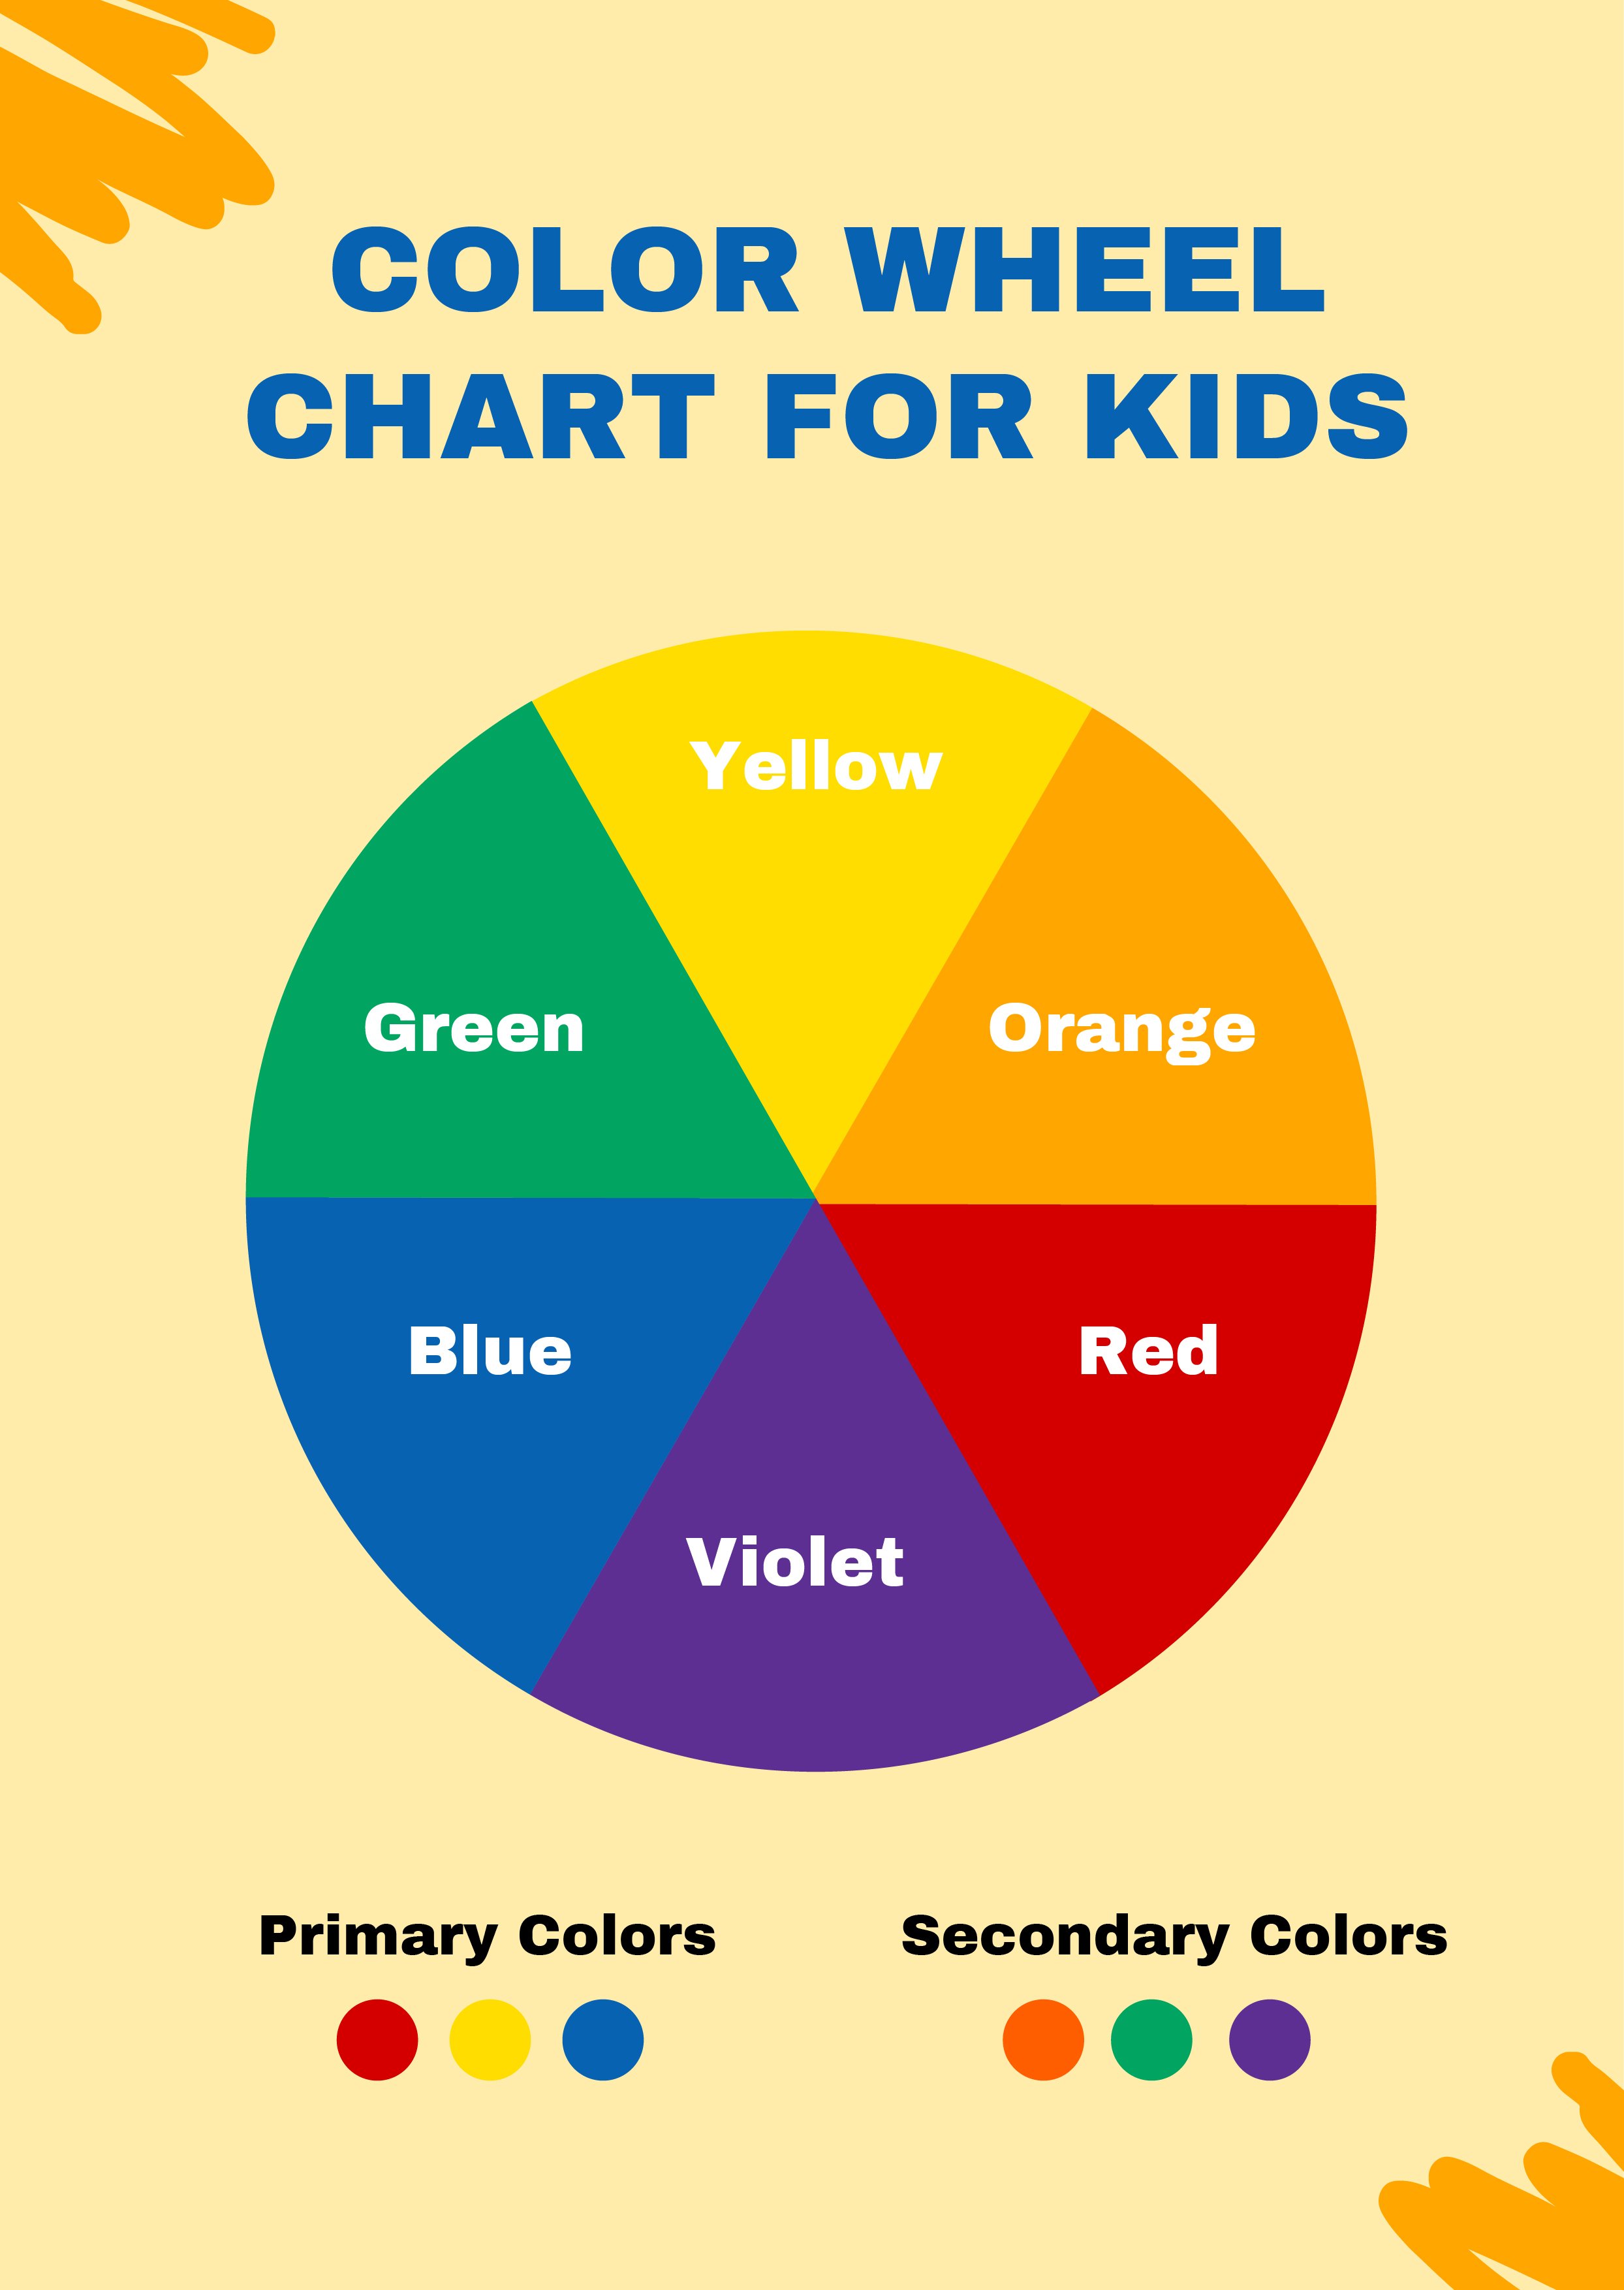 https://images.template.net/114000/color-wheel-chart-for-kids-44wmo.jpg